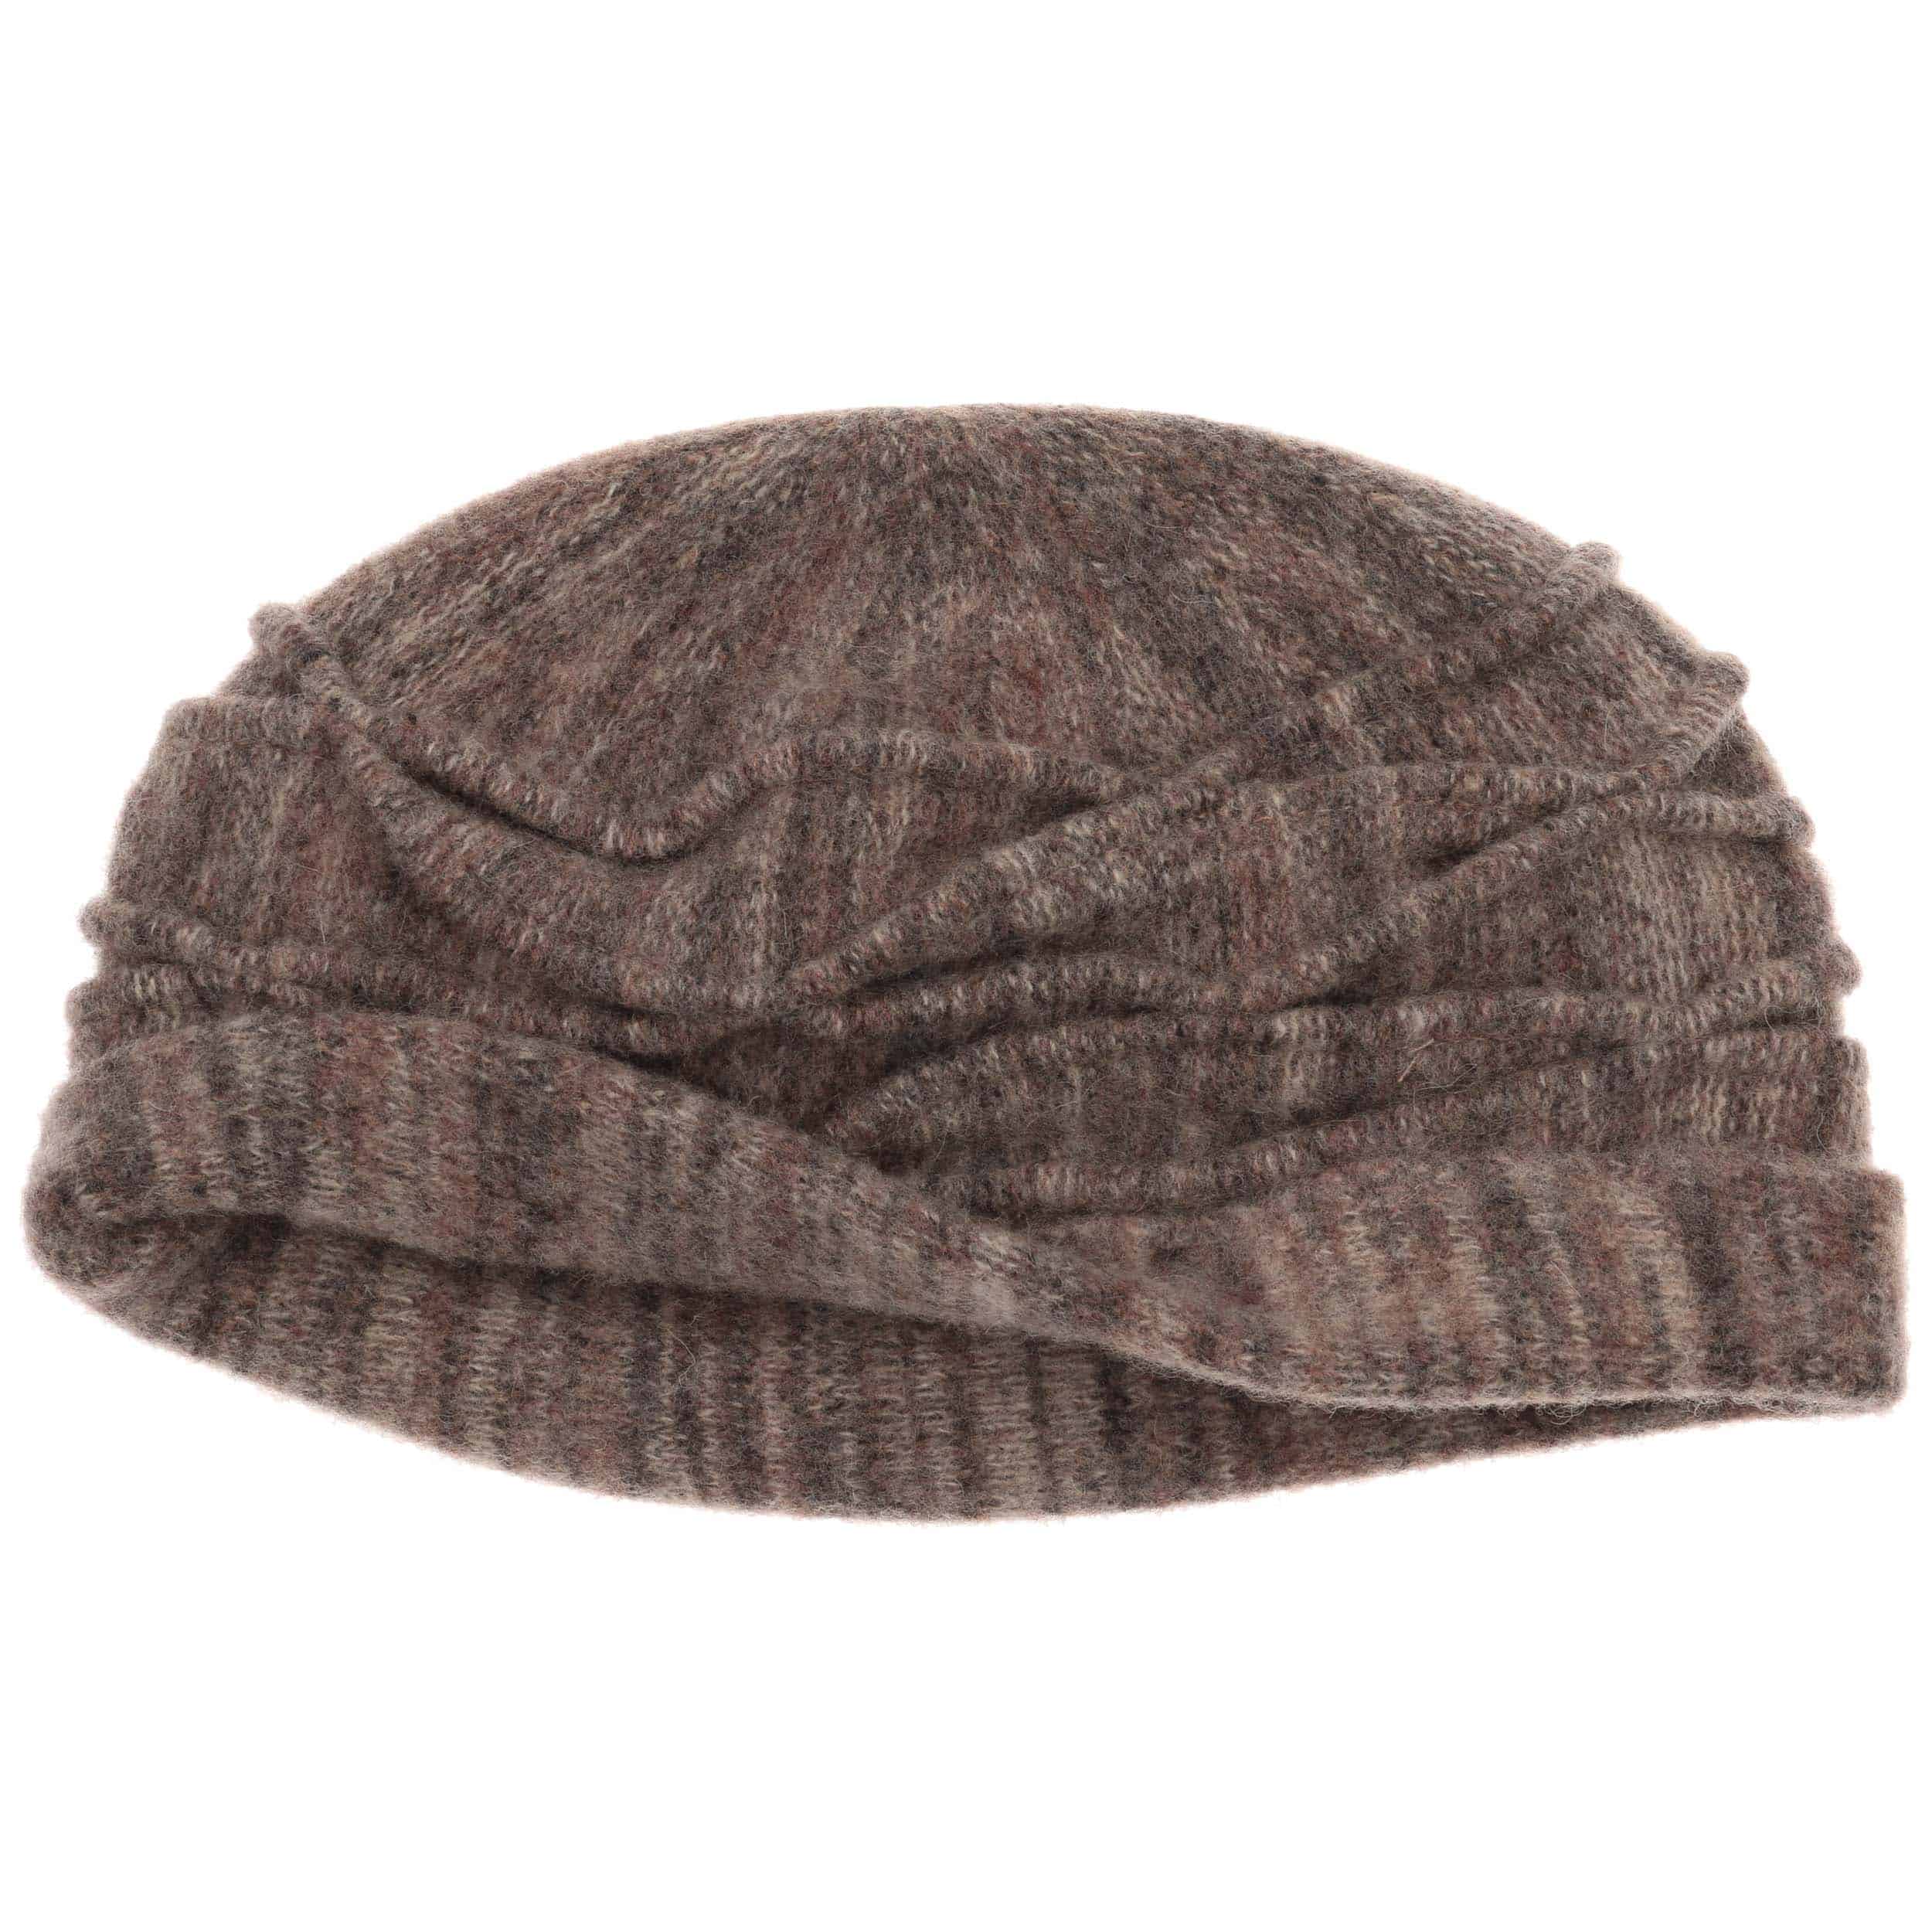 Malike Milled Wool Hat by McBURN - 24,95